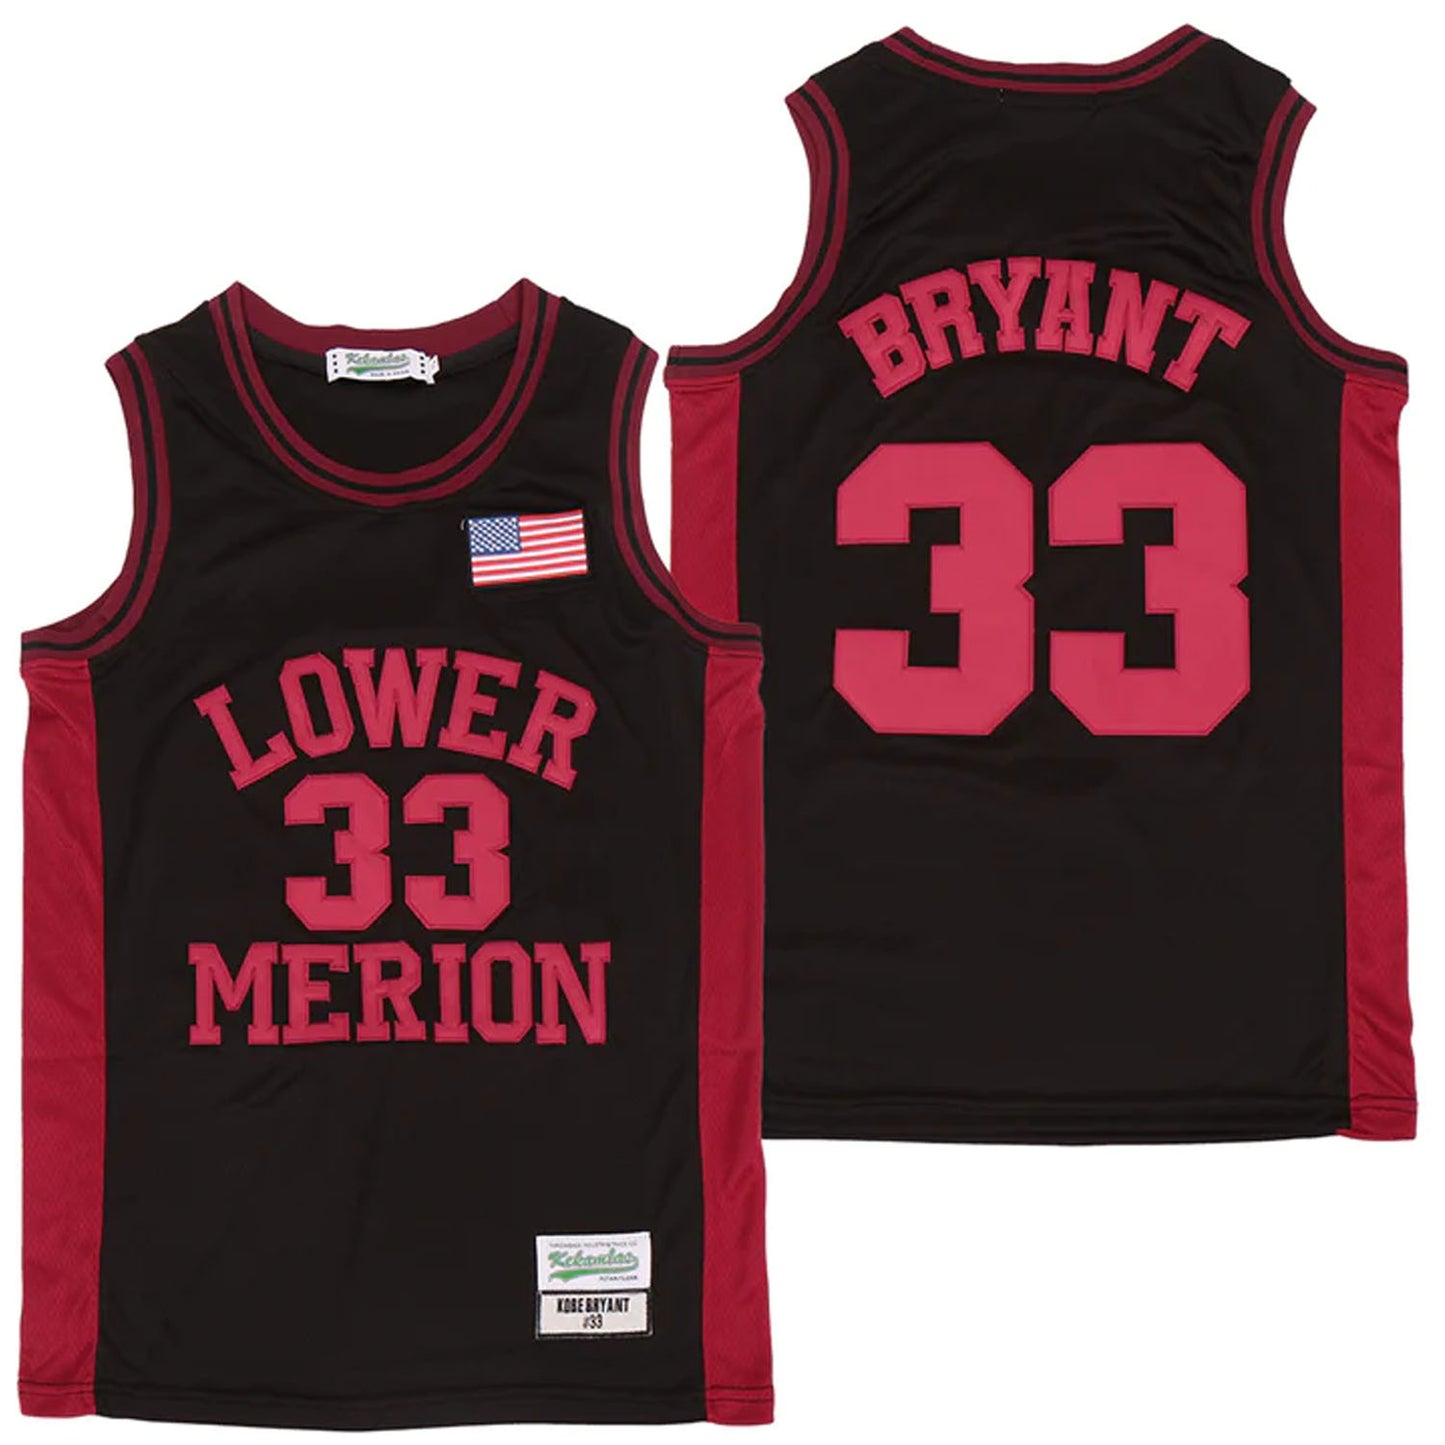 Kobe Bryant Lower Merion High School 33 Jersey